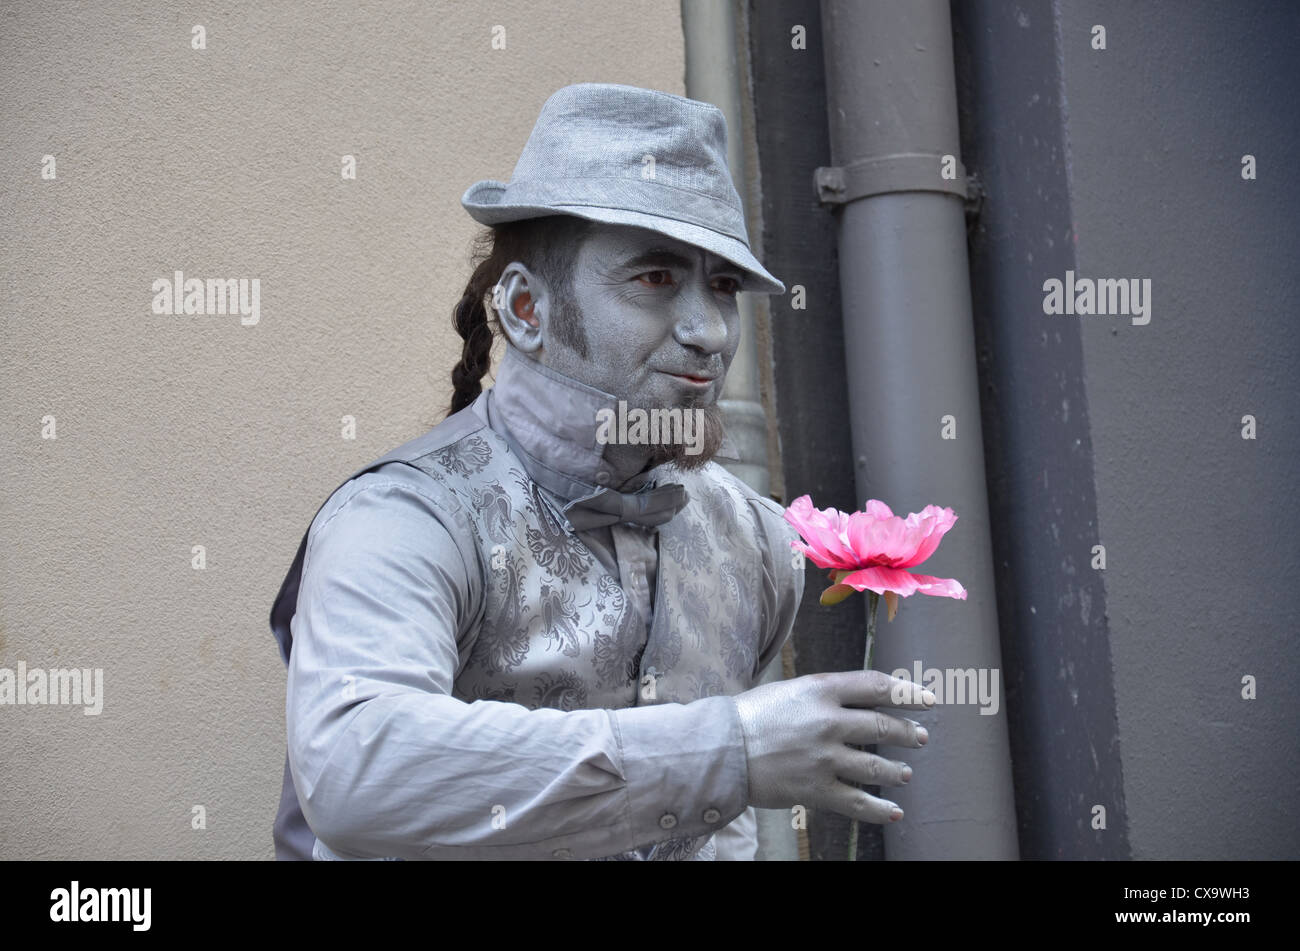 Un uomo in vernice argento tenendo un rosa in mano Foto Stock